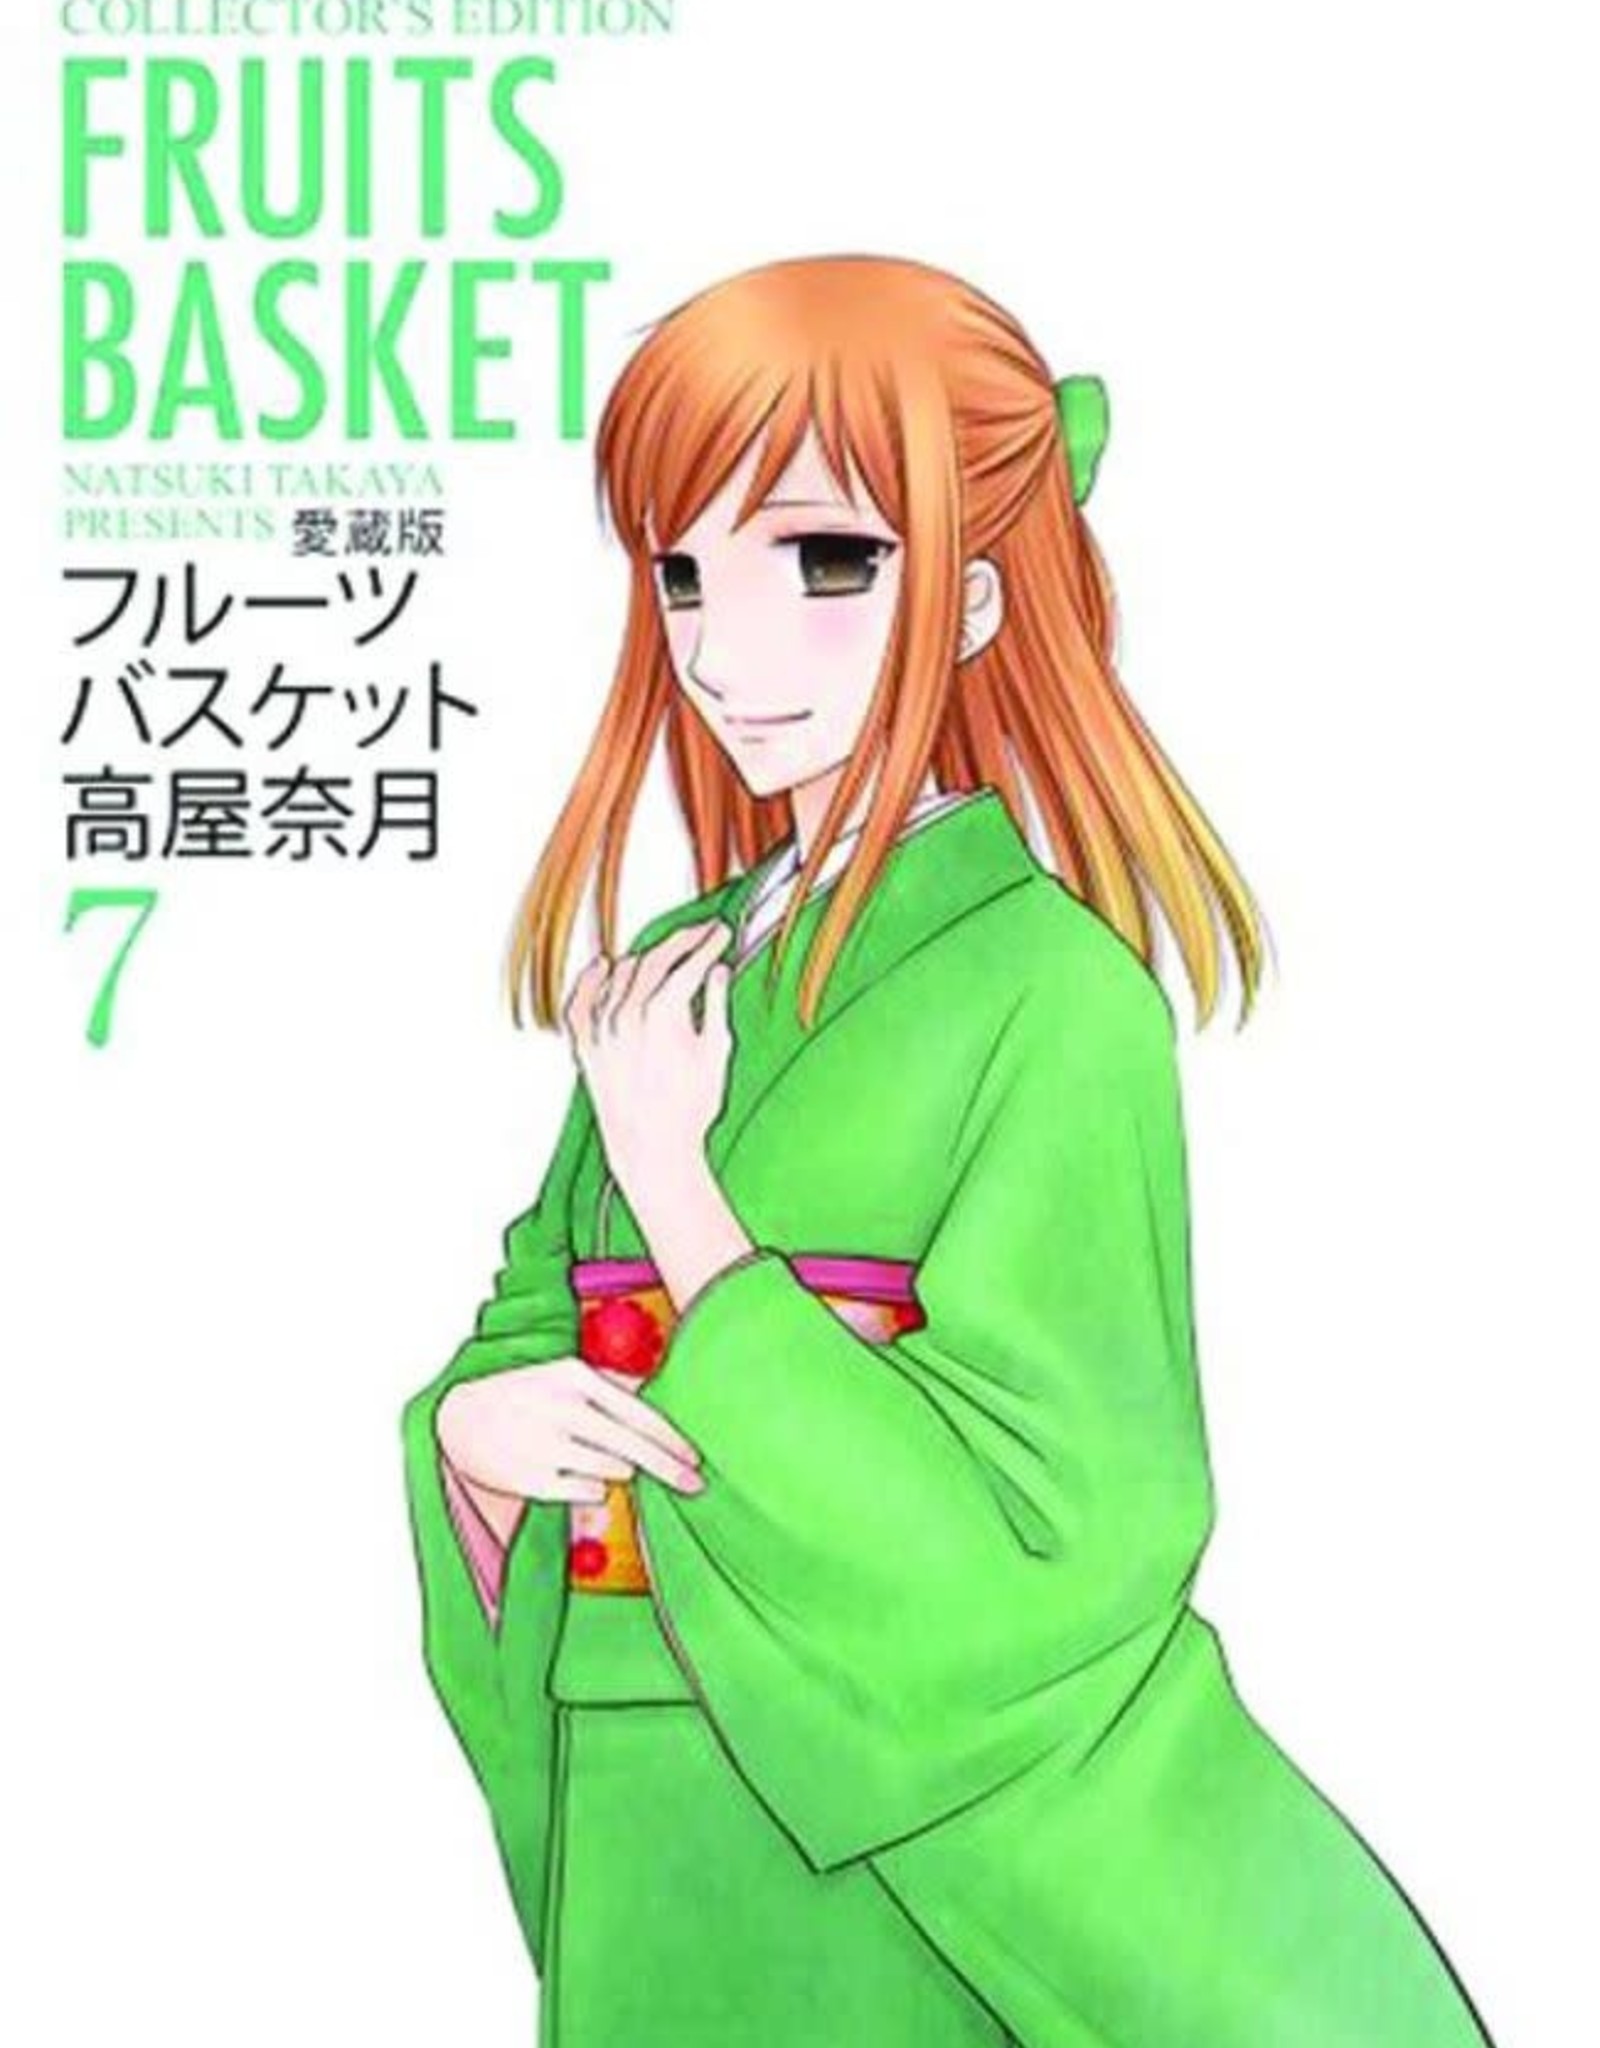 Yen Press Fruits Basket Collectors Edition GN Vol 07